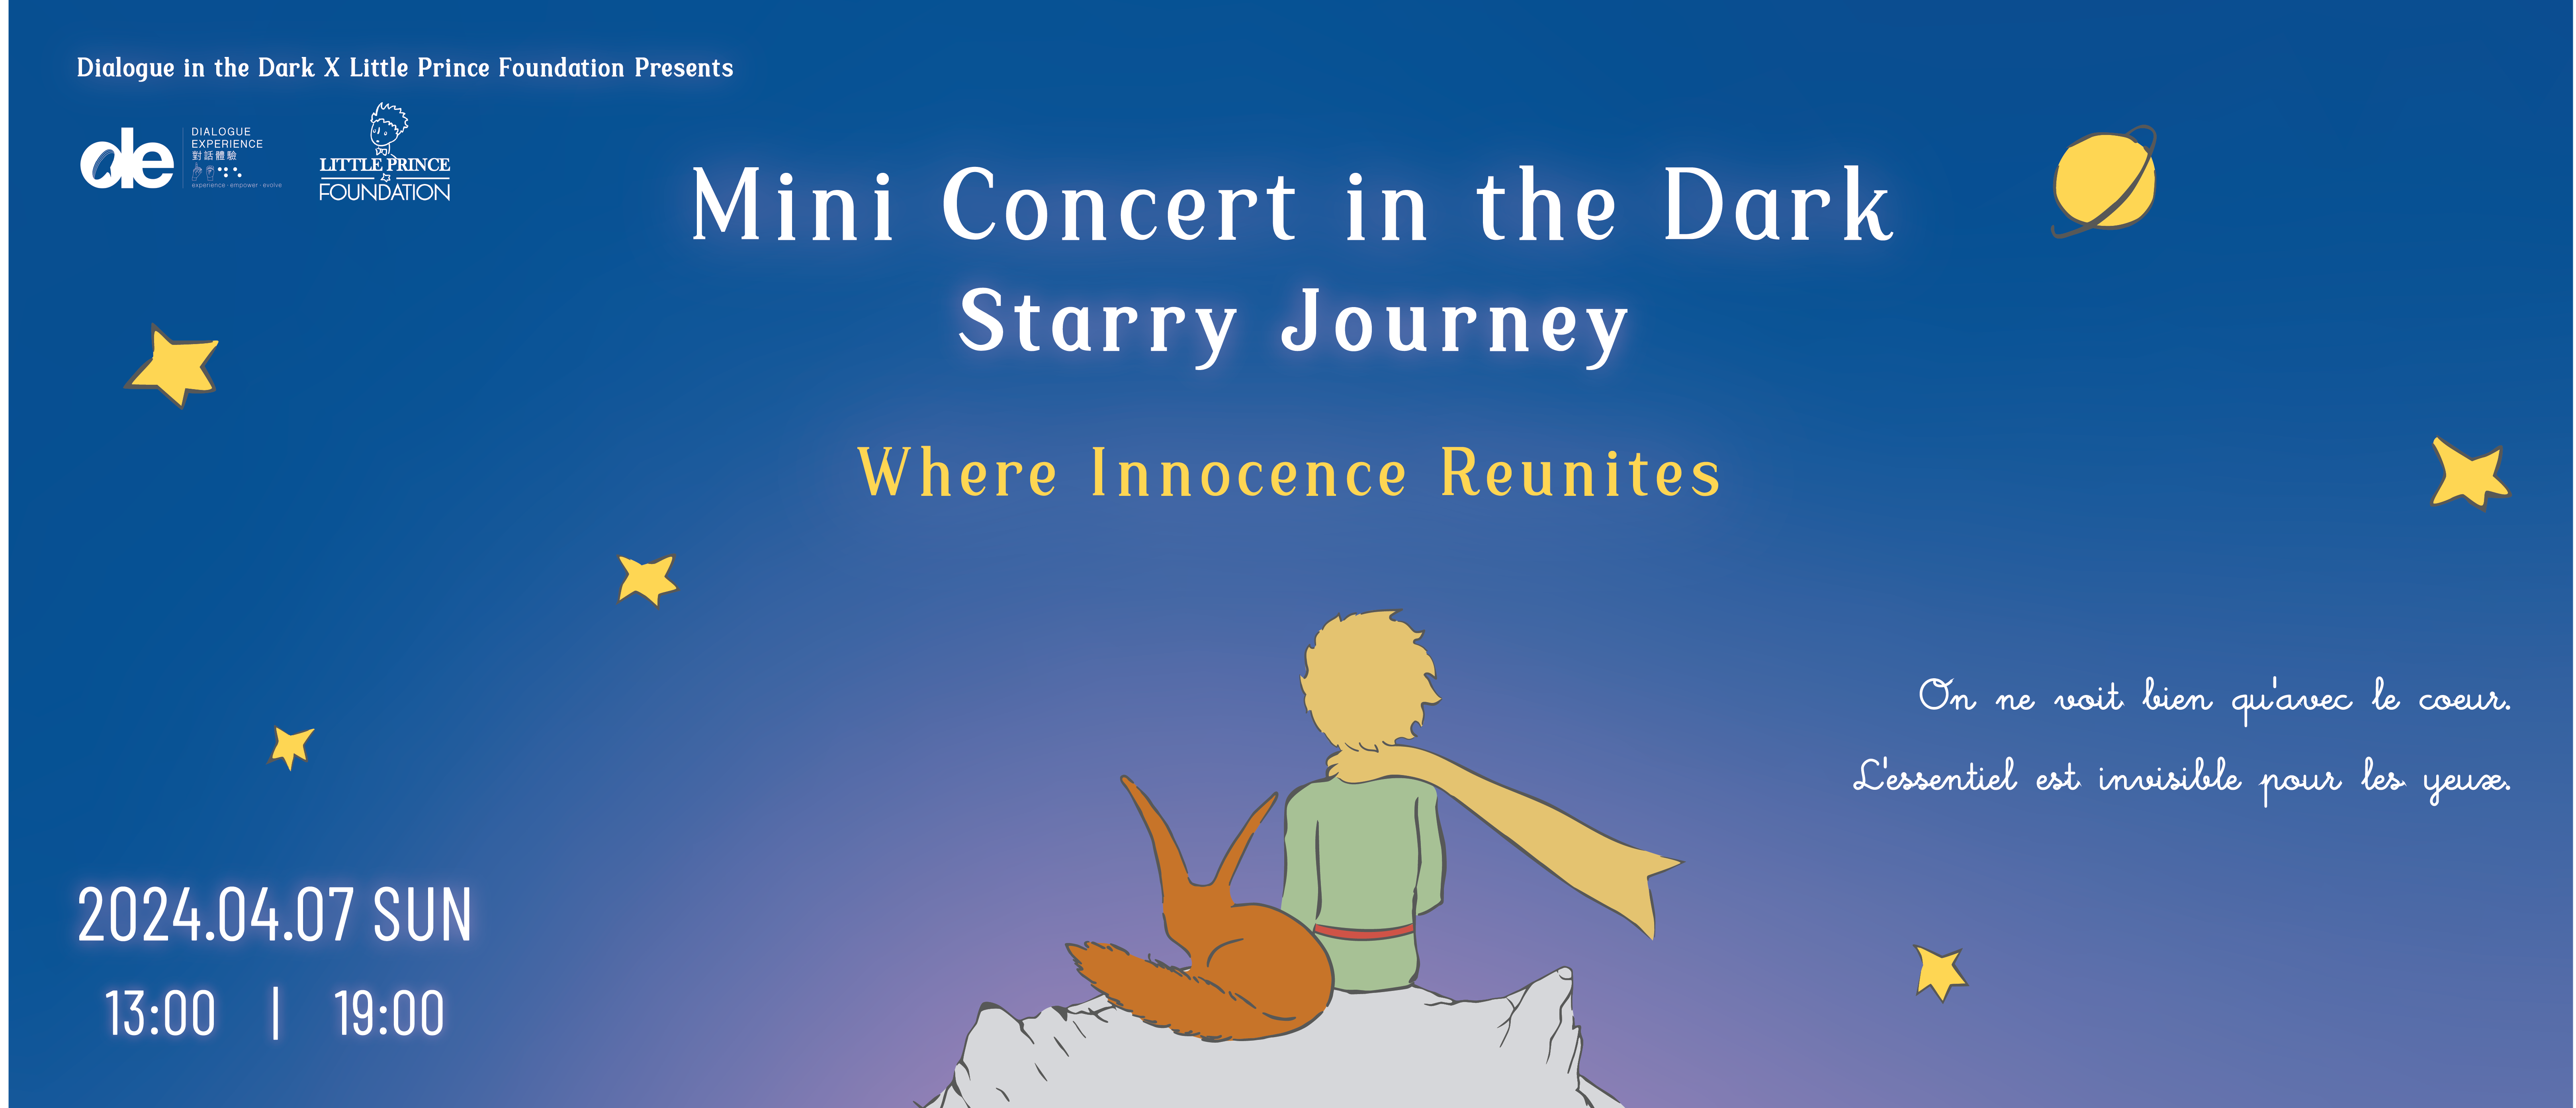 Mini Concert in the Dark - Starry Journey